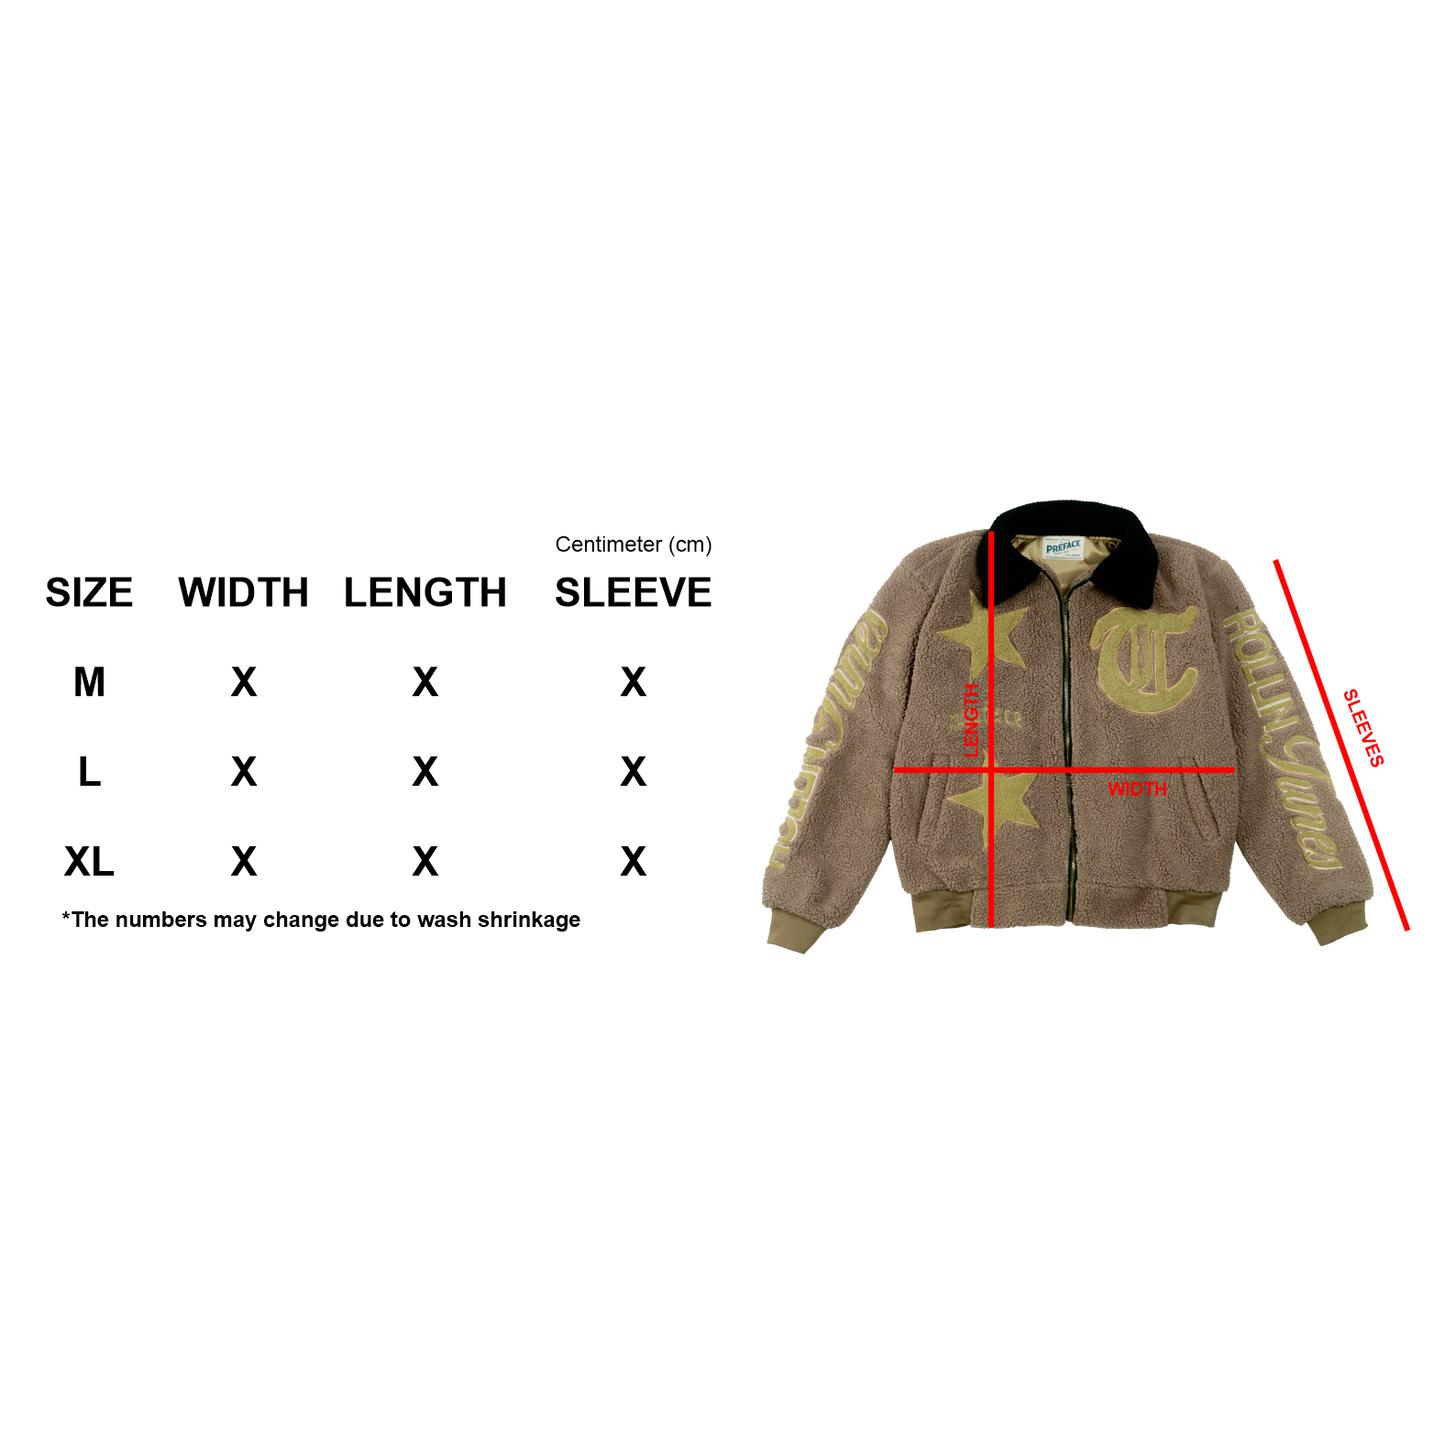 The Brown Glazed Sherpa Jacket